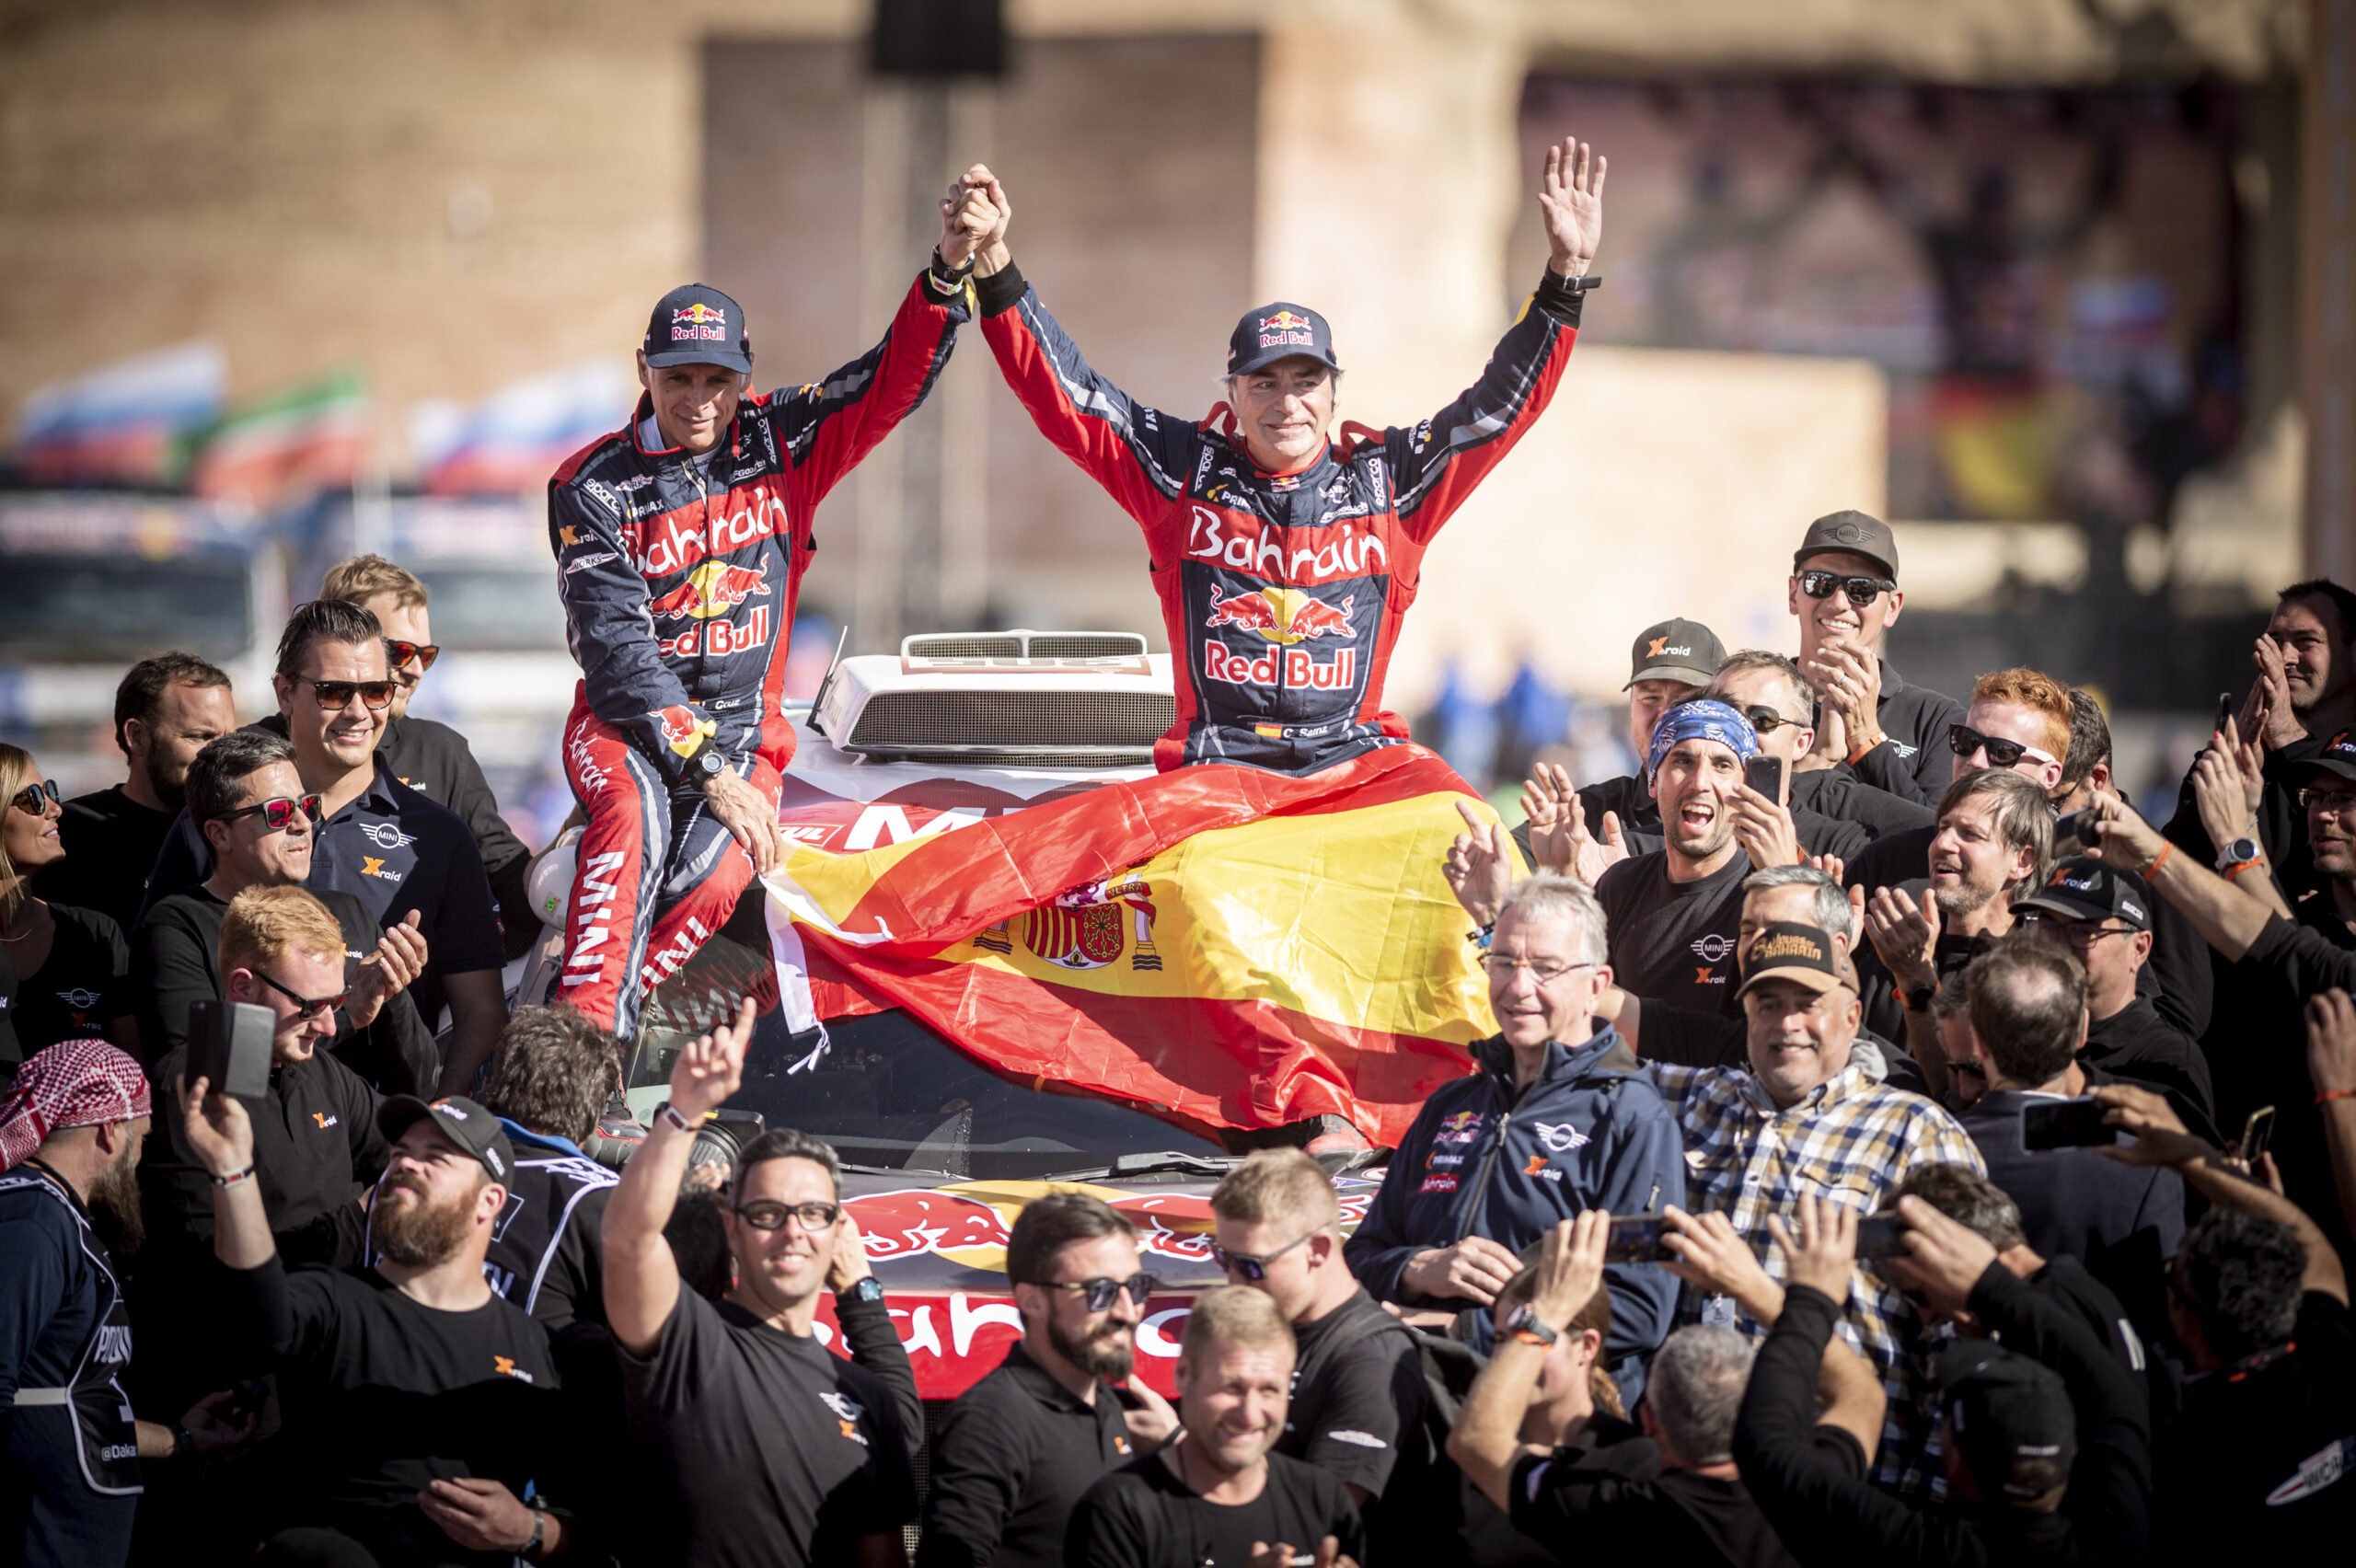 Carlos Sainz won his third Dakar Rally